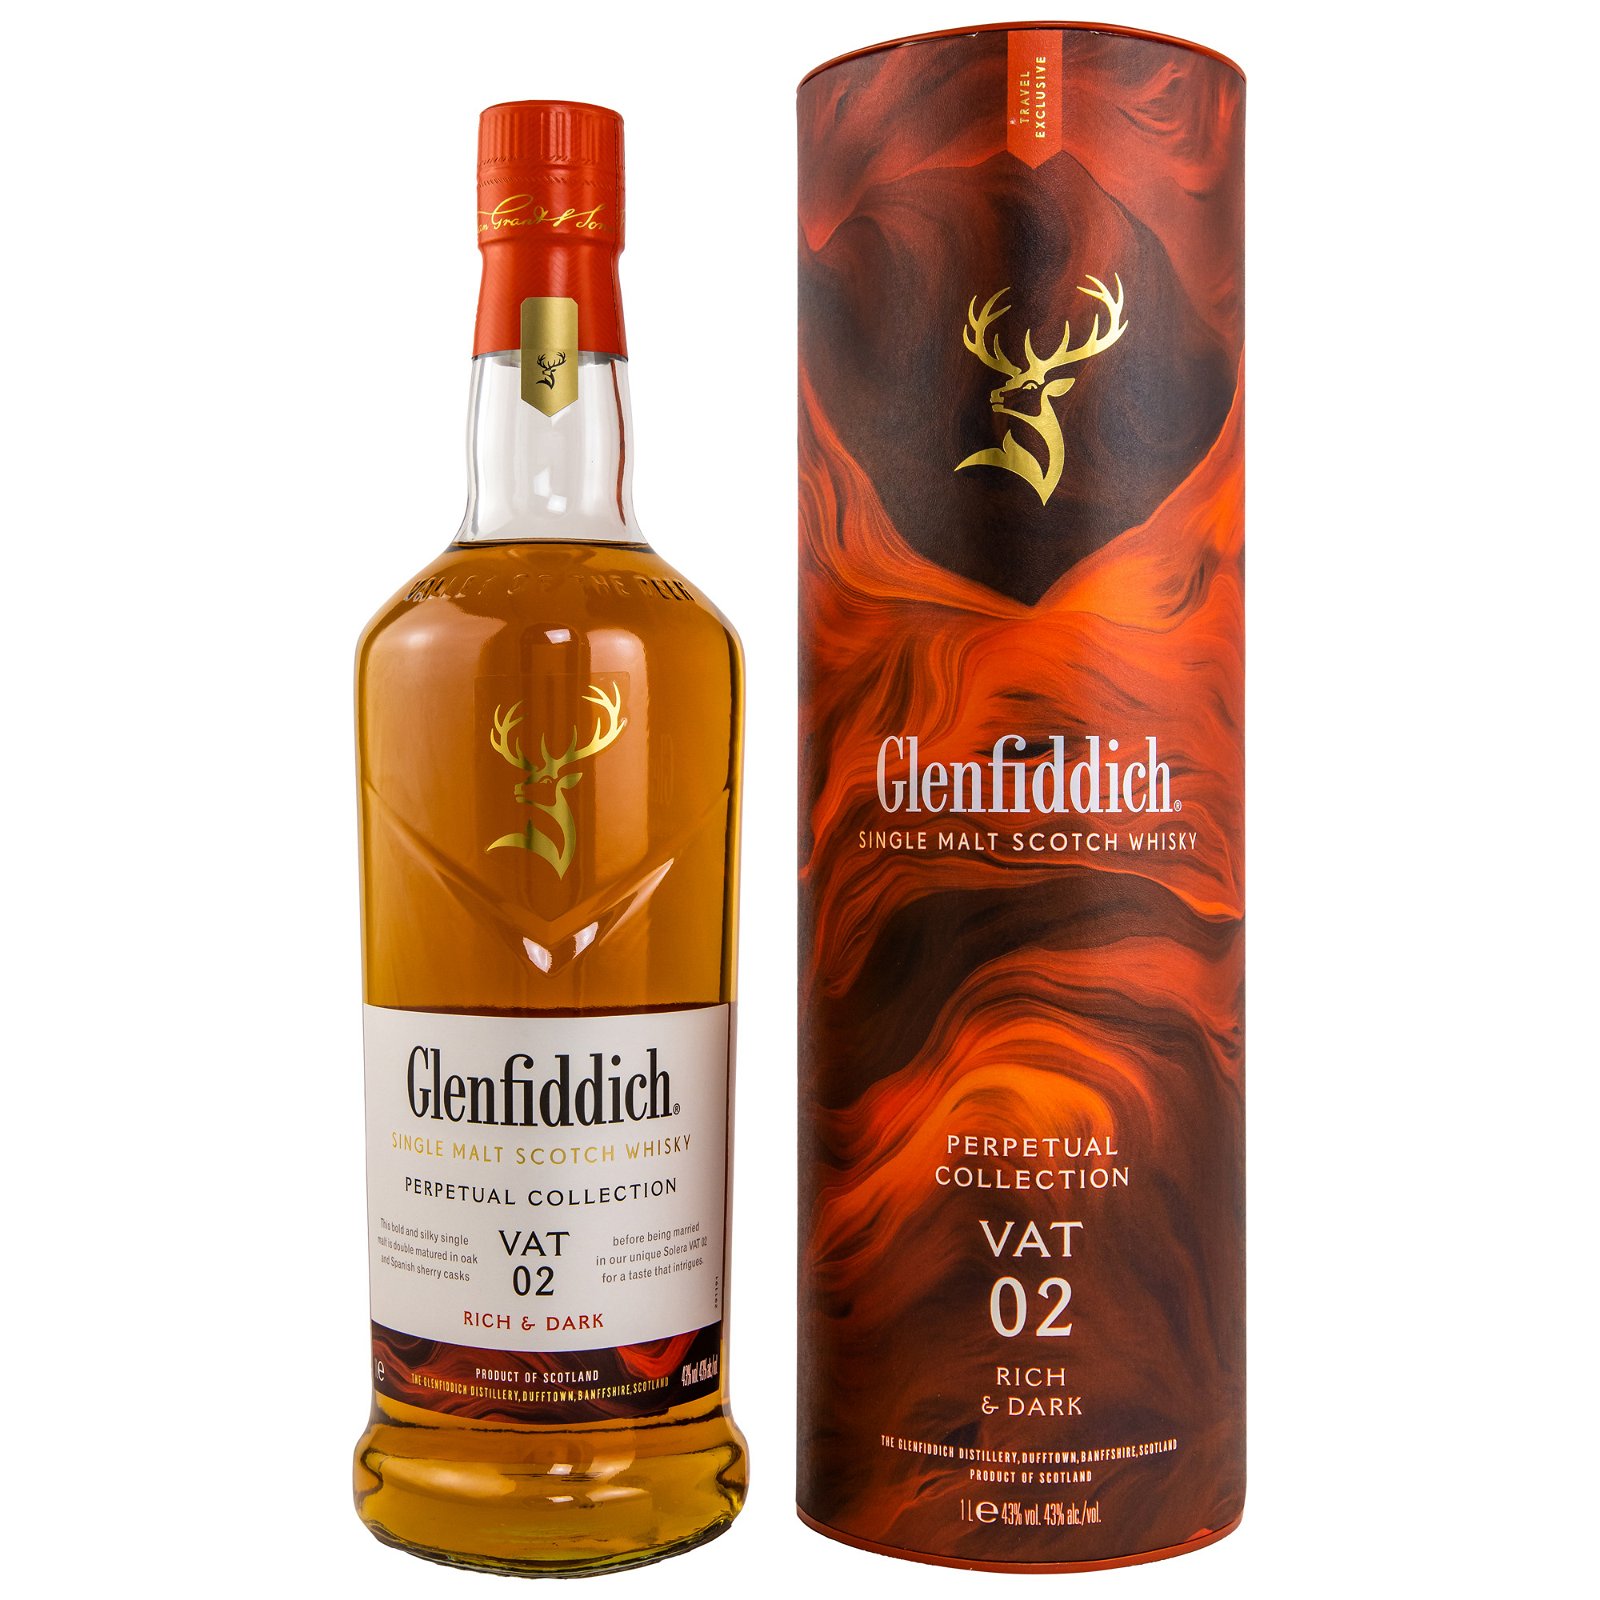 Glenfiddich Perpetual Collection Vat 02 (Liter)